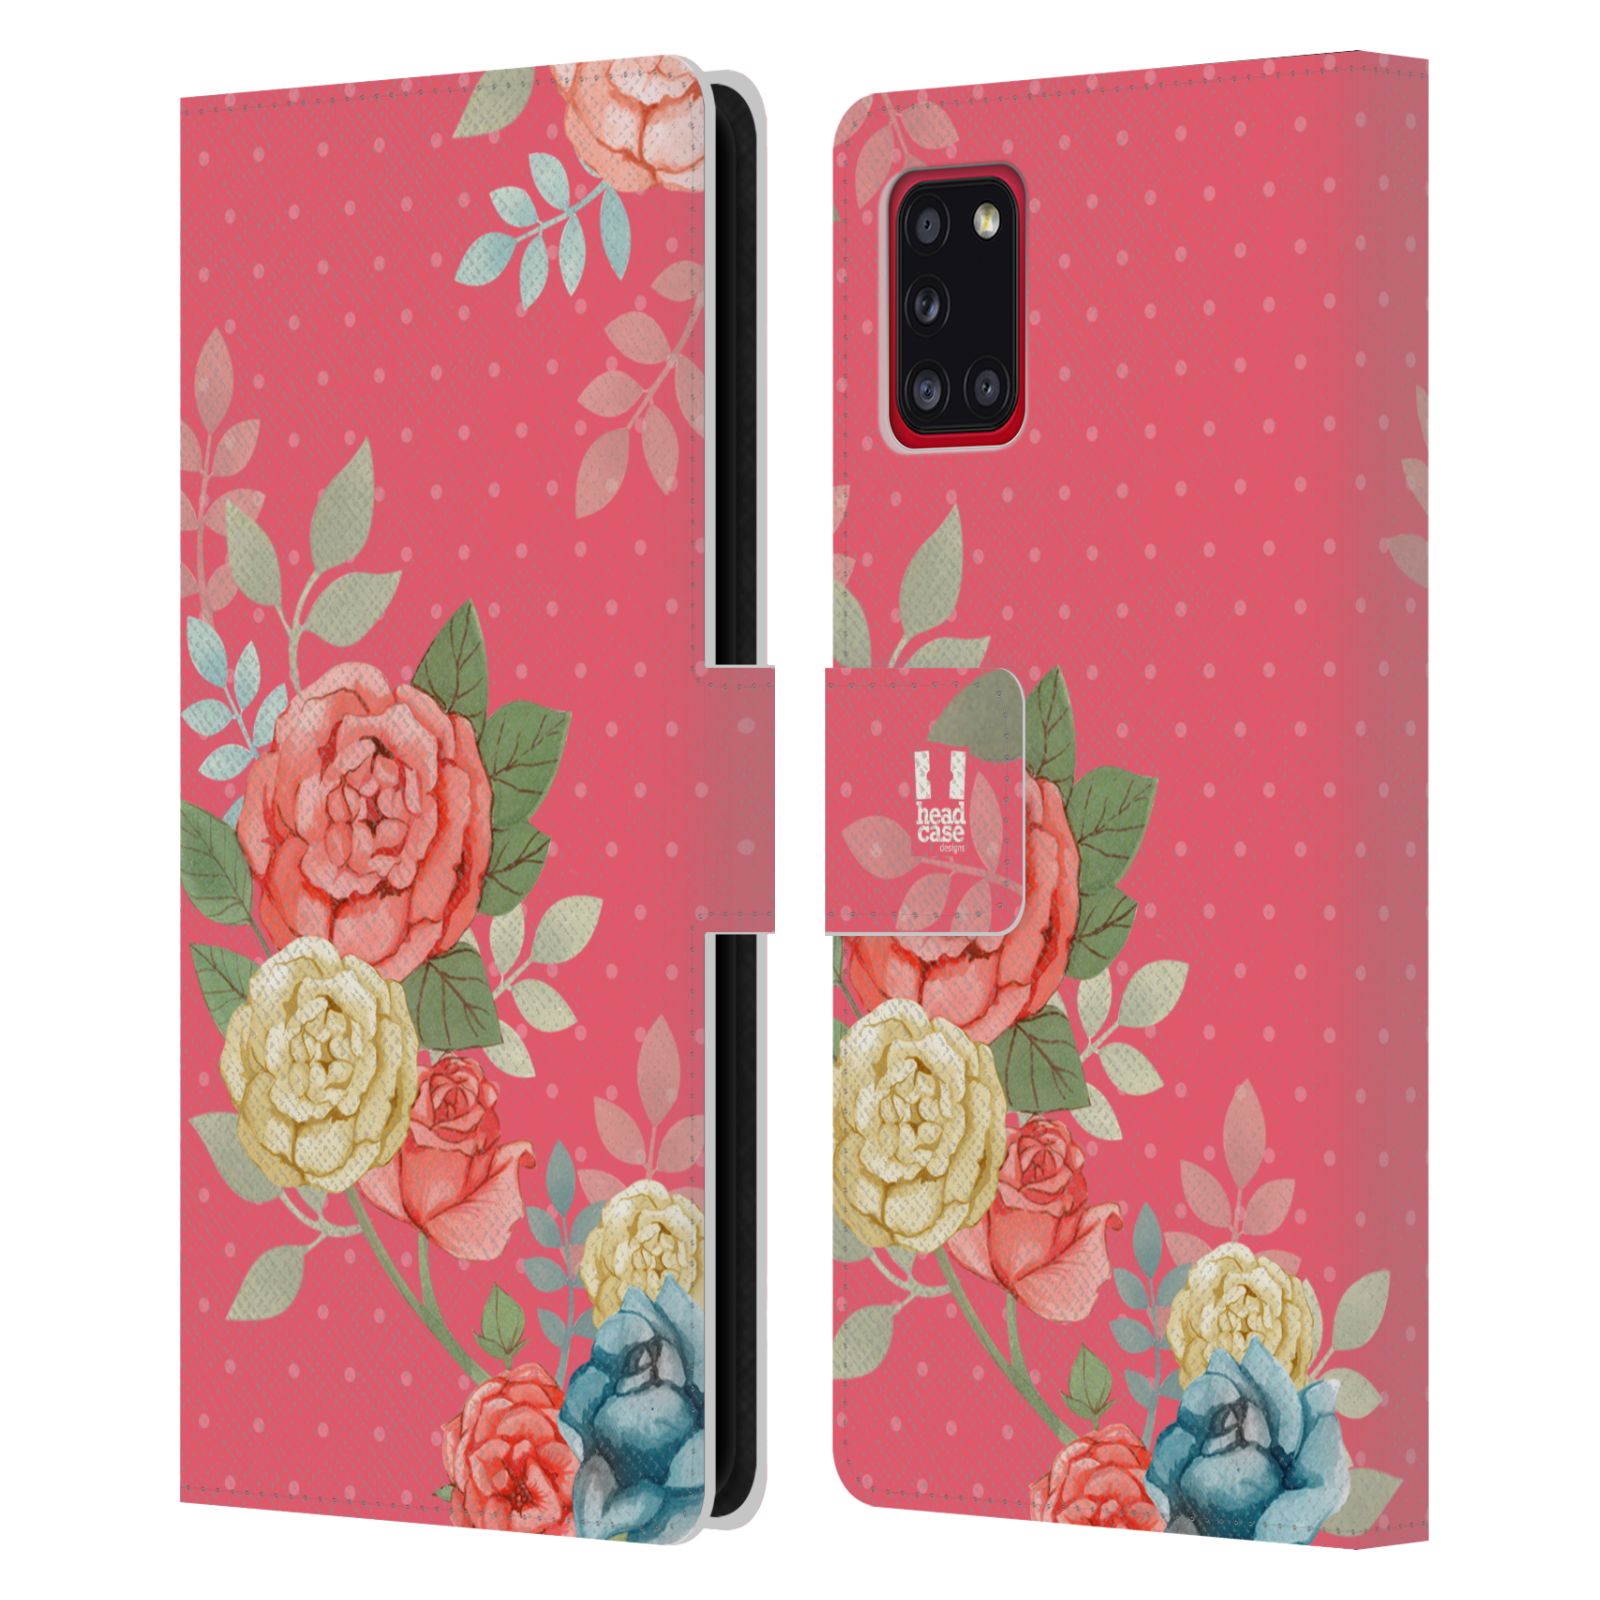 Pouzdro HEAD CASE na mobil Samsung Galaxy A31 romantické květy růžová